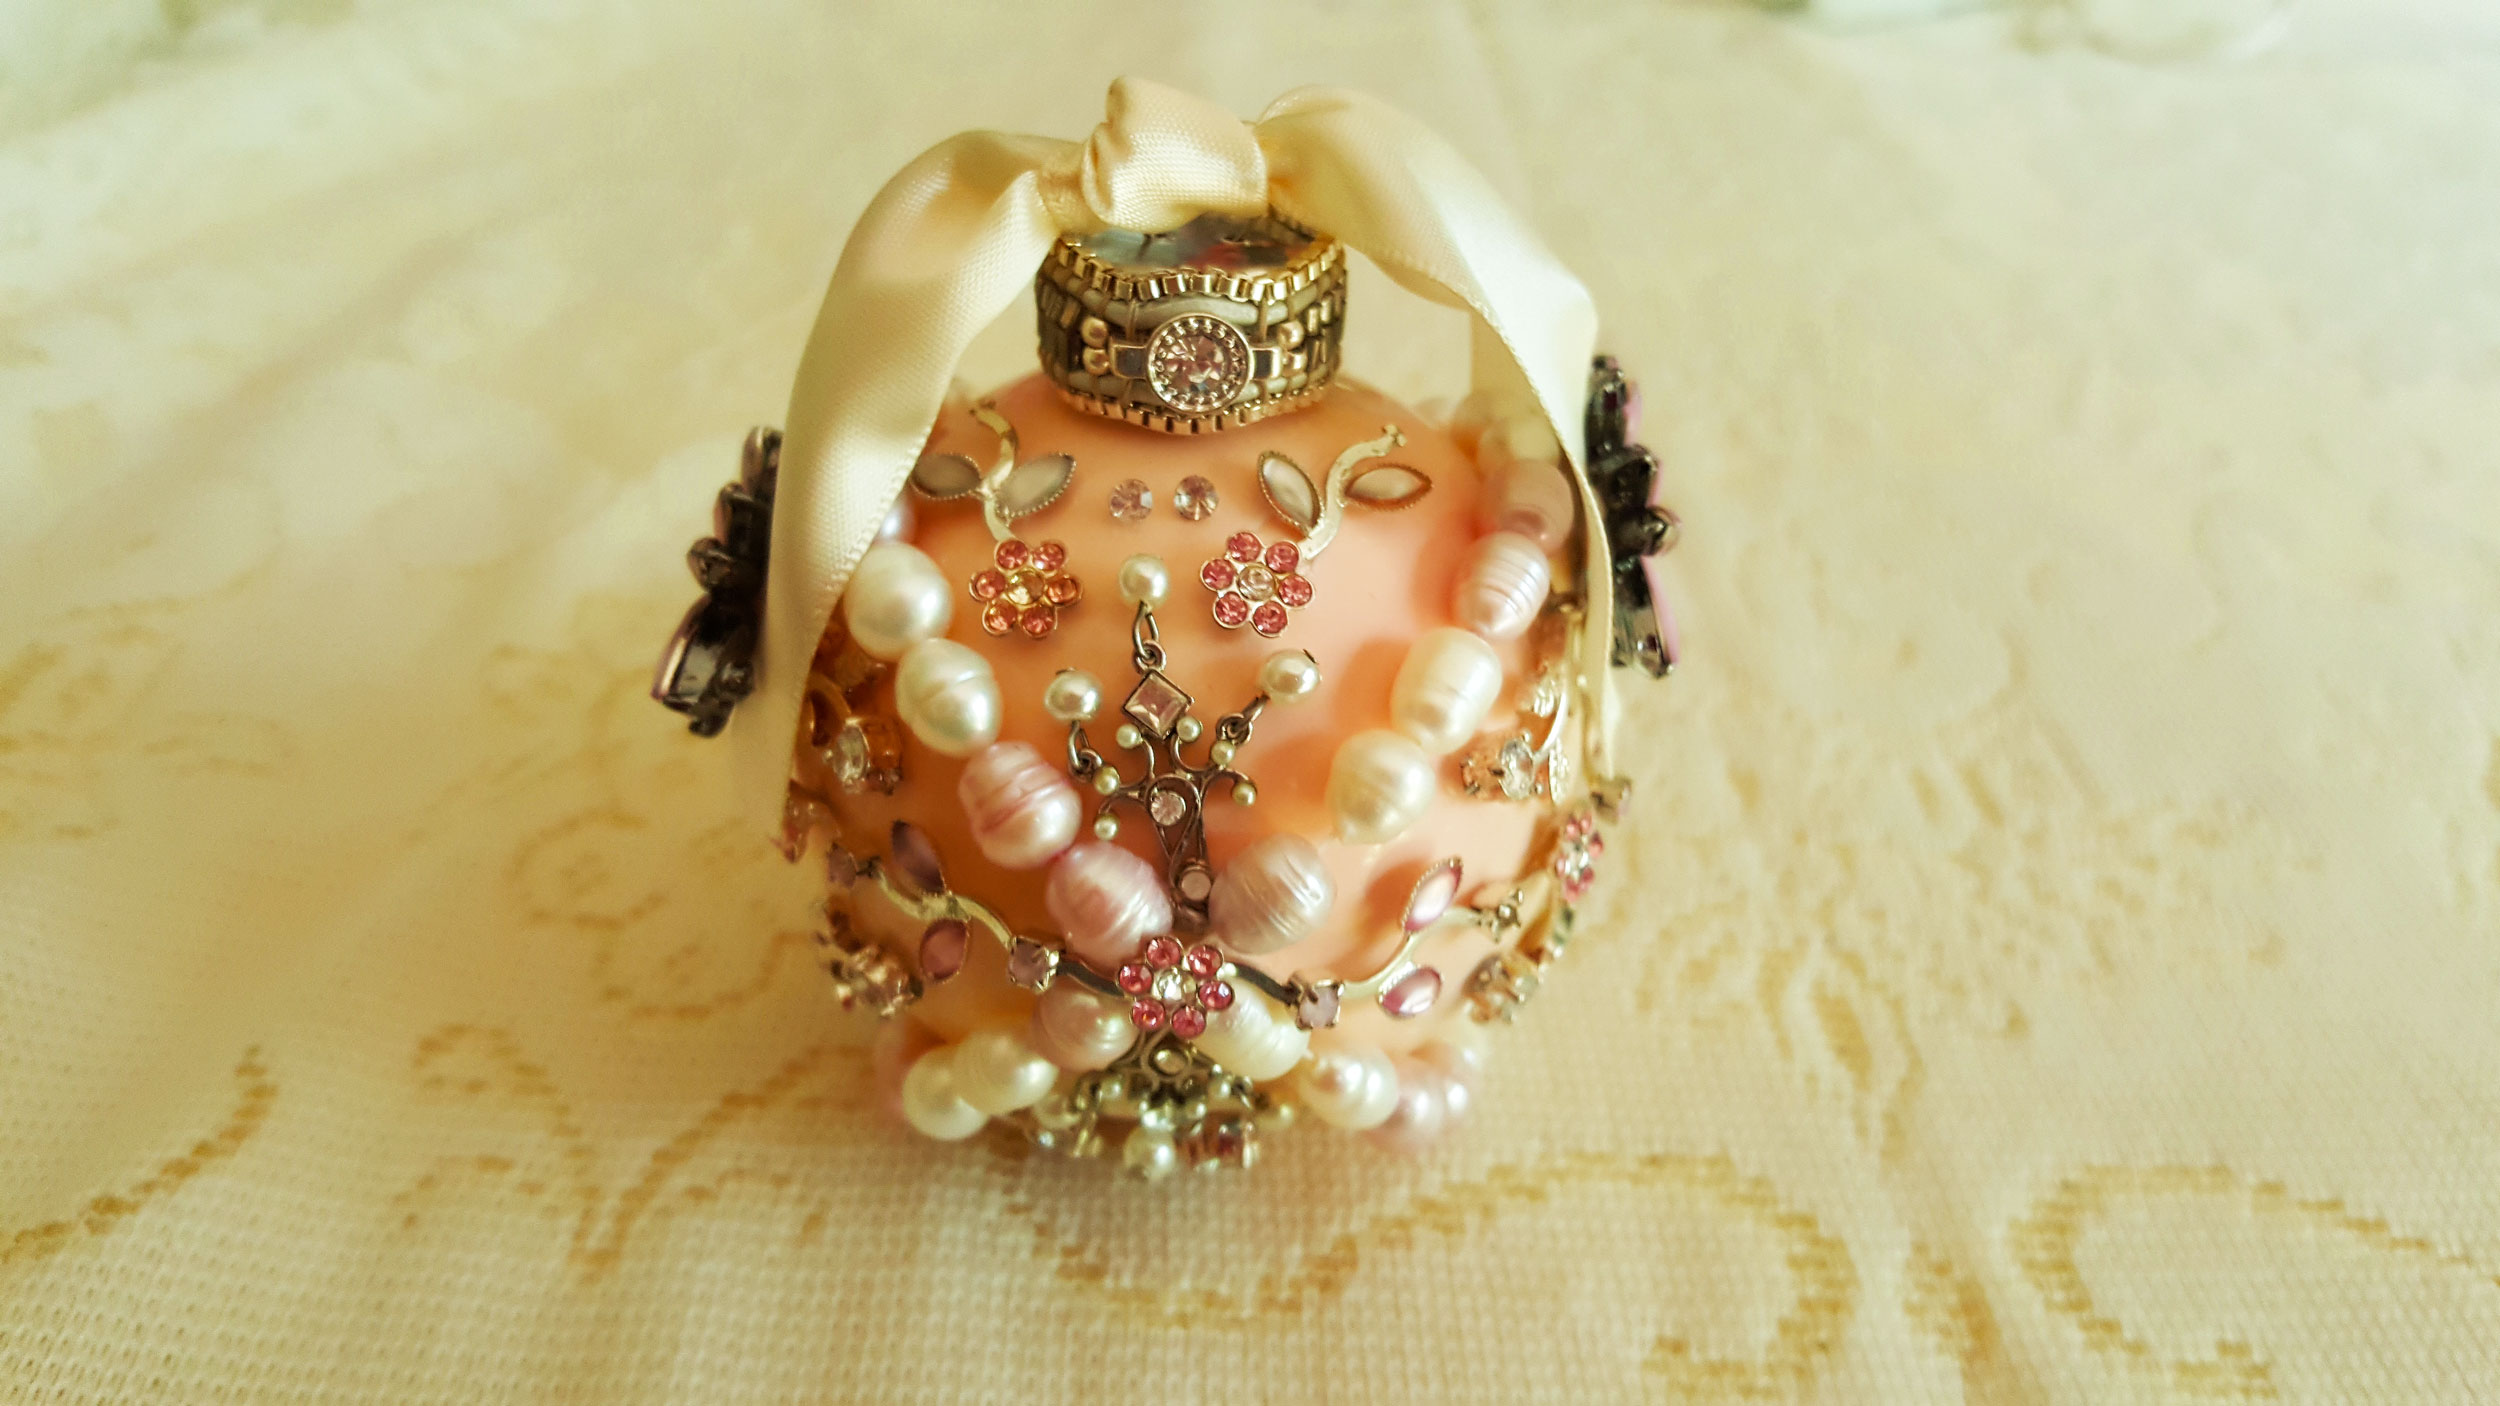 A DIY wedding ornament made of upcycled jewelry. | OrnamentShop.com